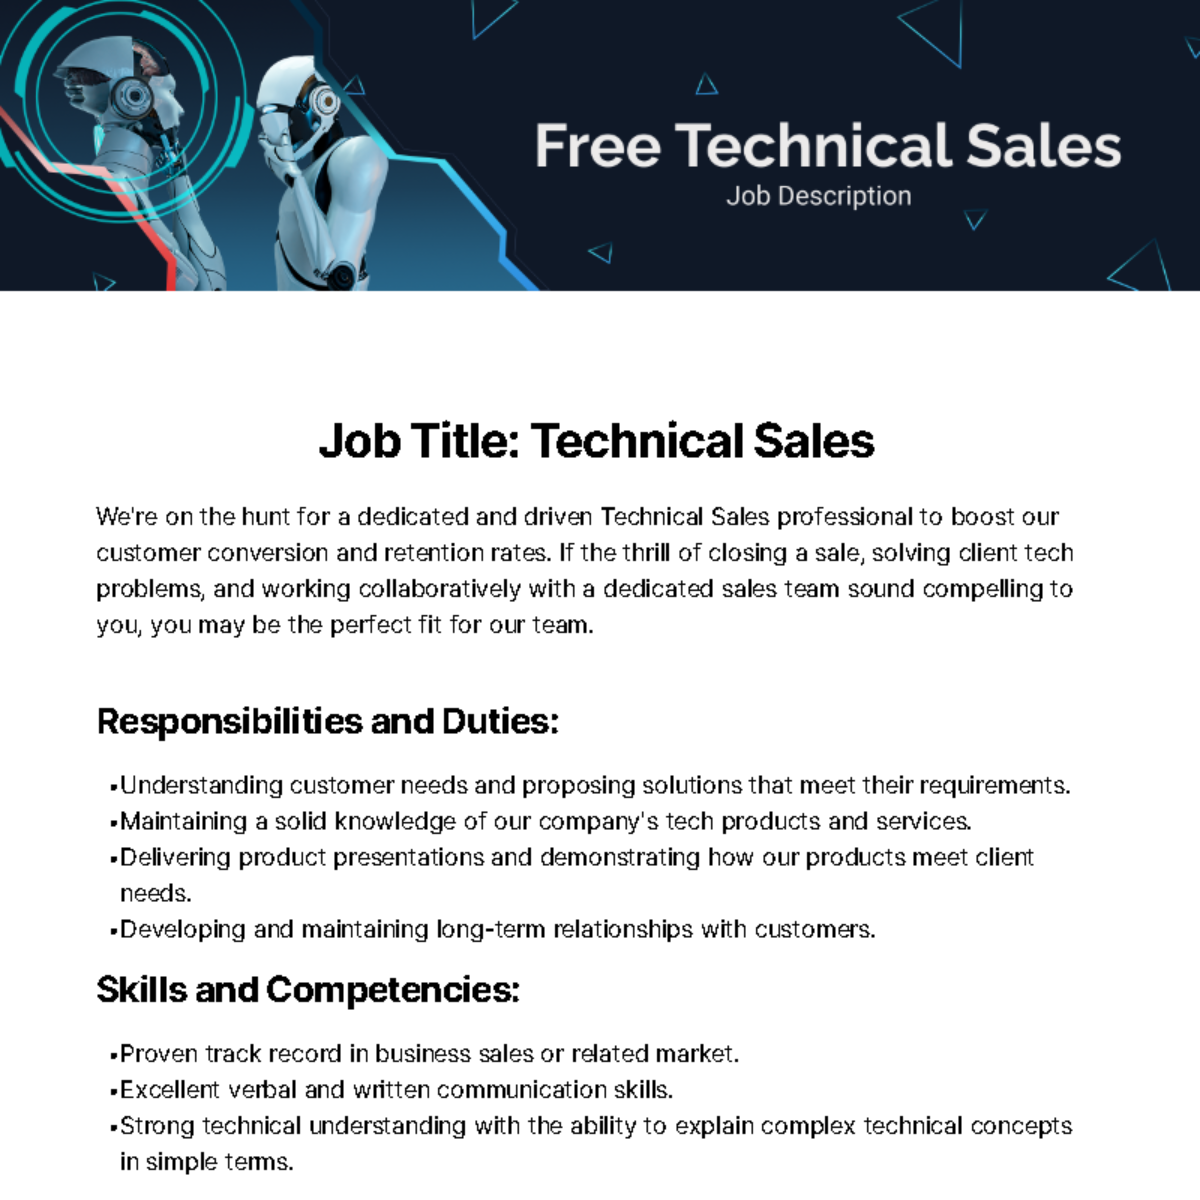 Free Technical Sales Job Description Template